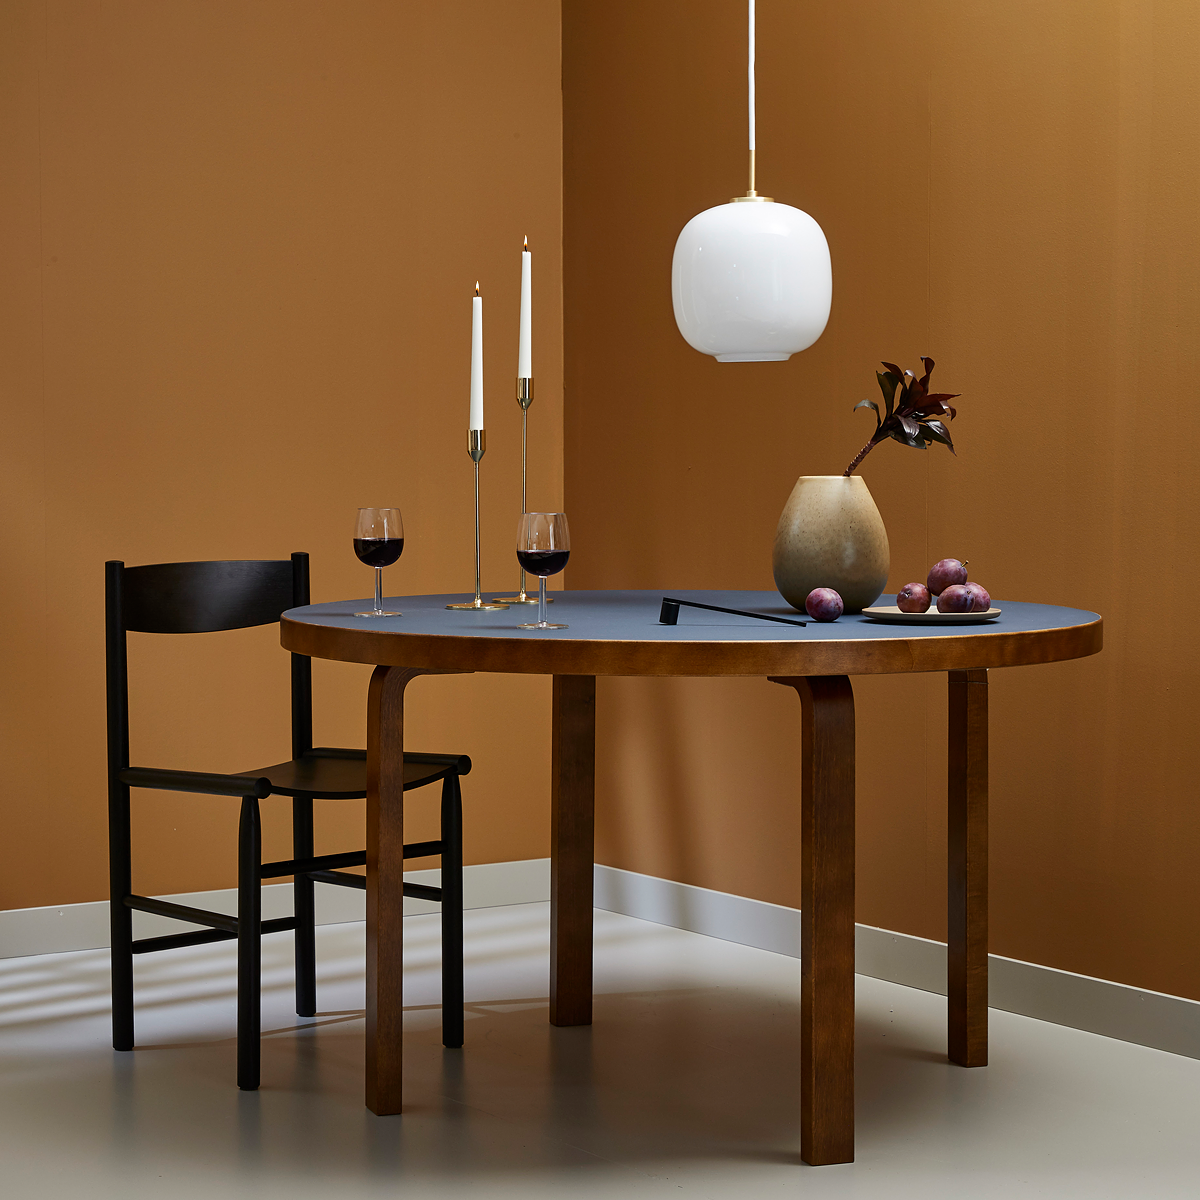 Artek's Aalto table 91 in a dining room